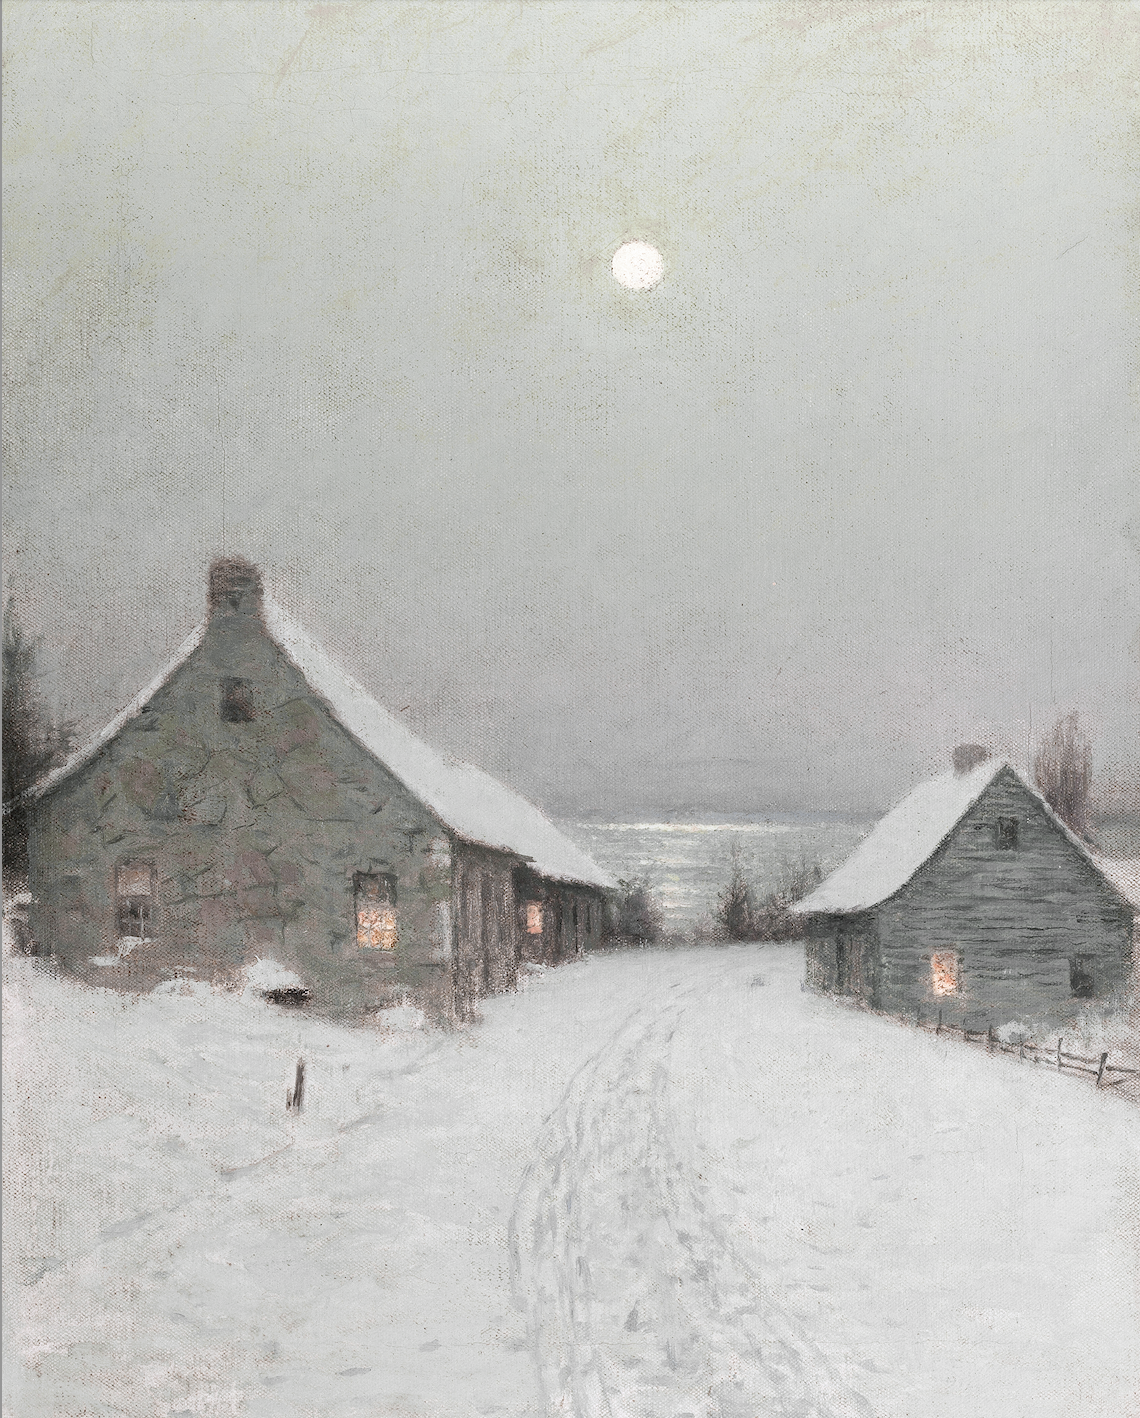 Vintage Landscape Print | Winter Village